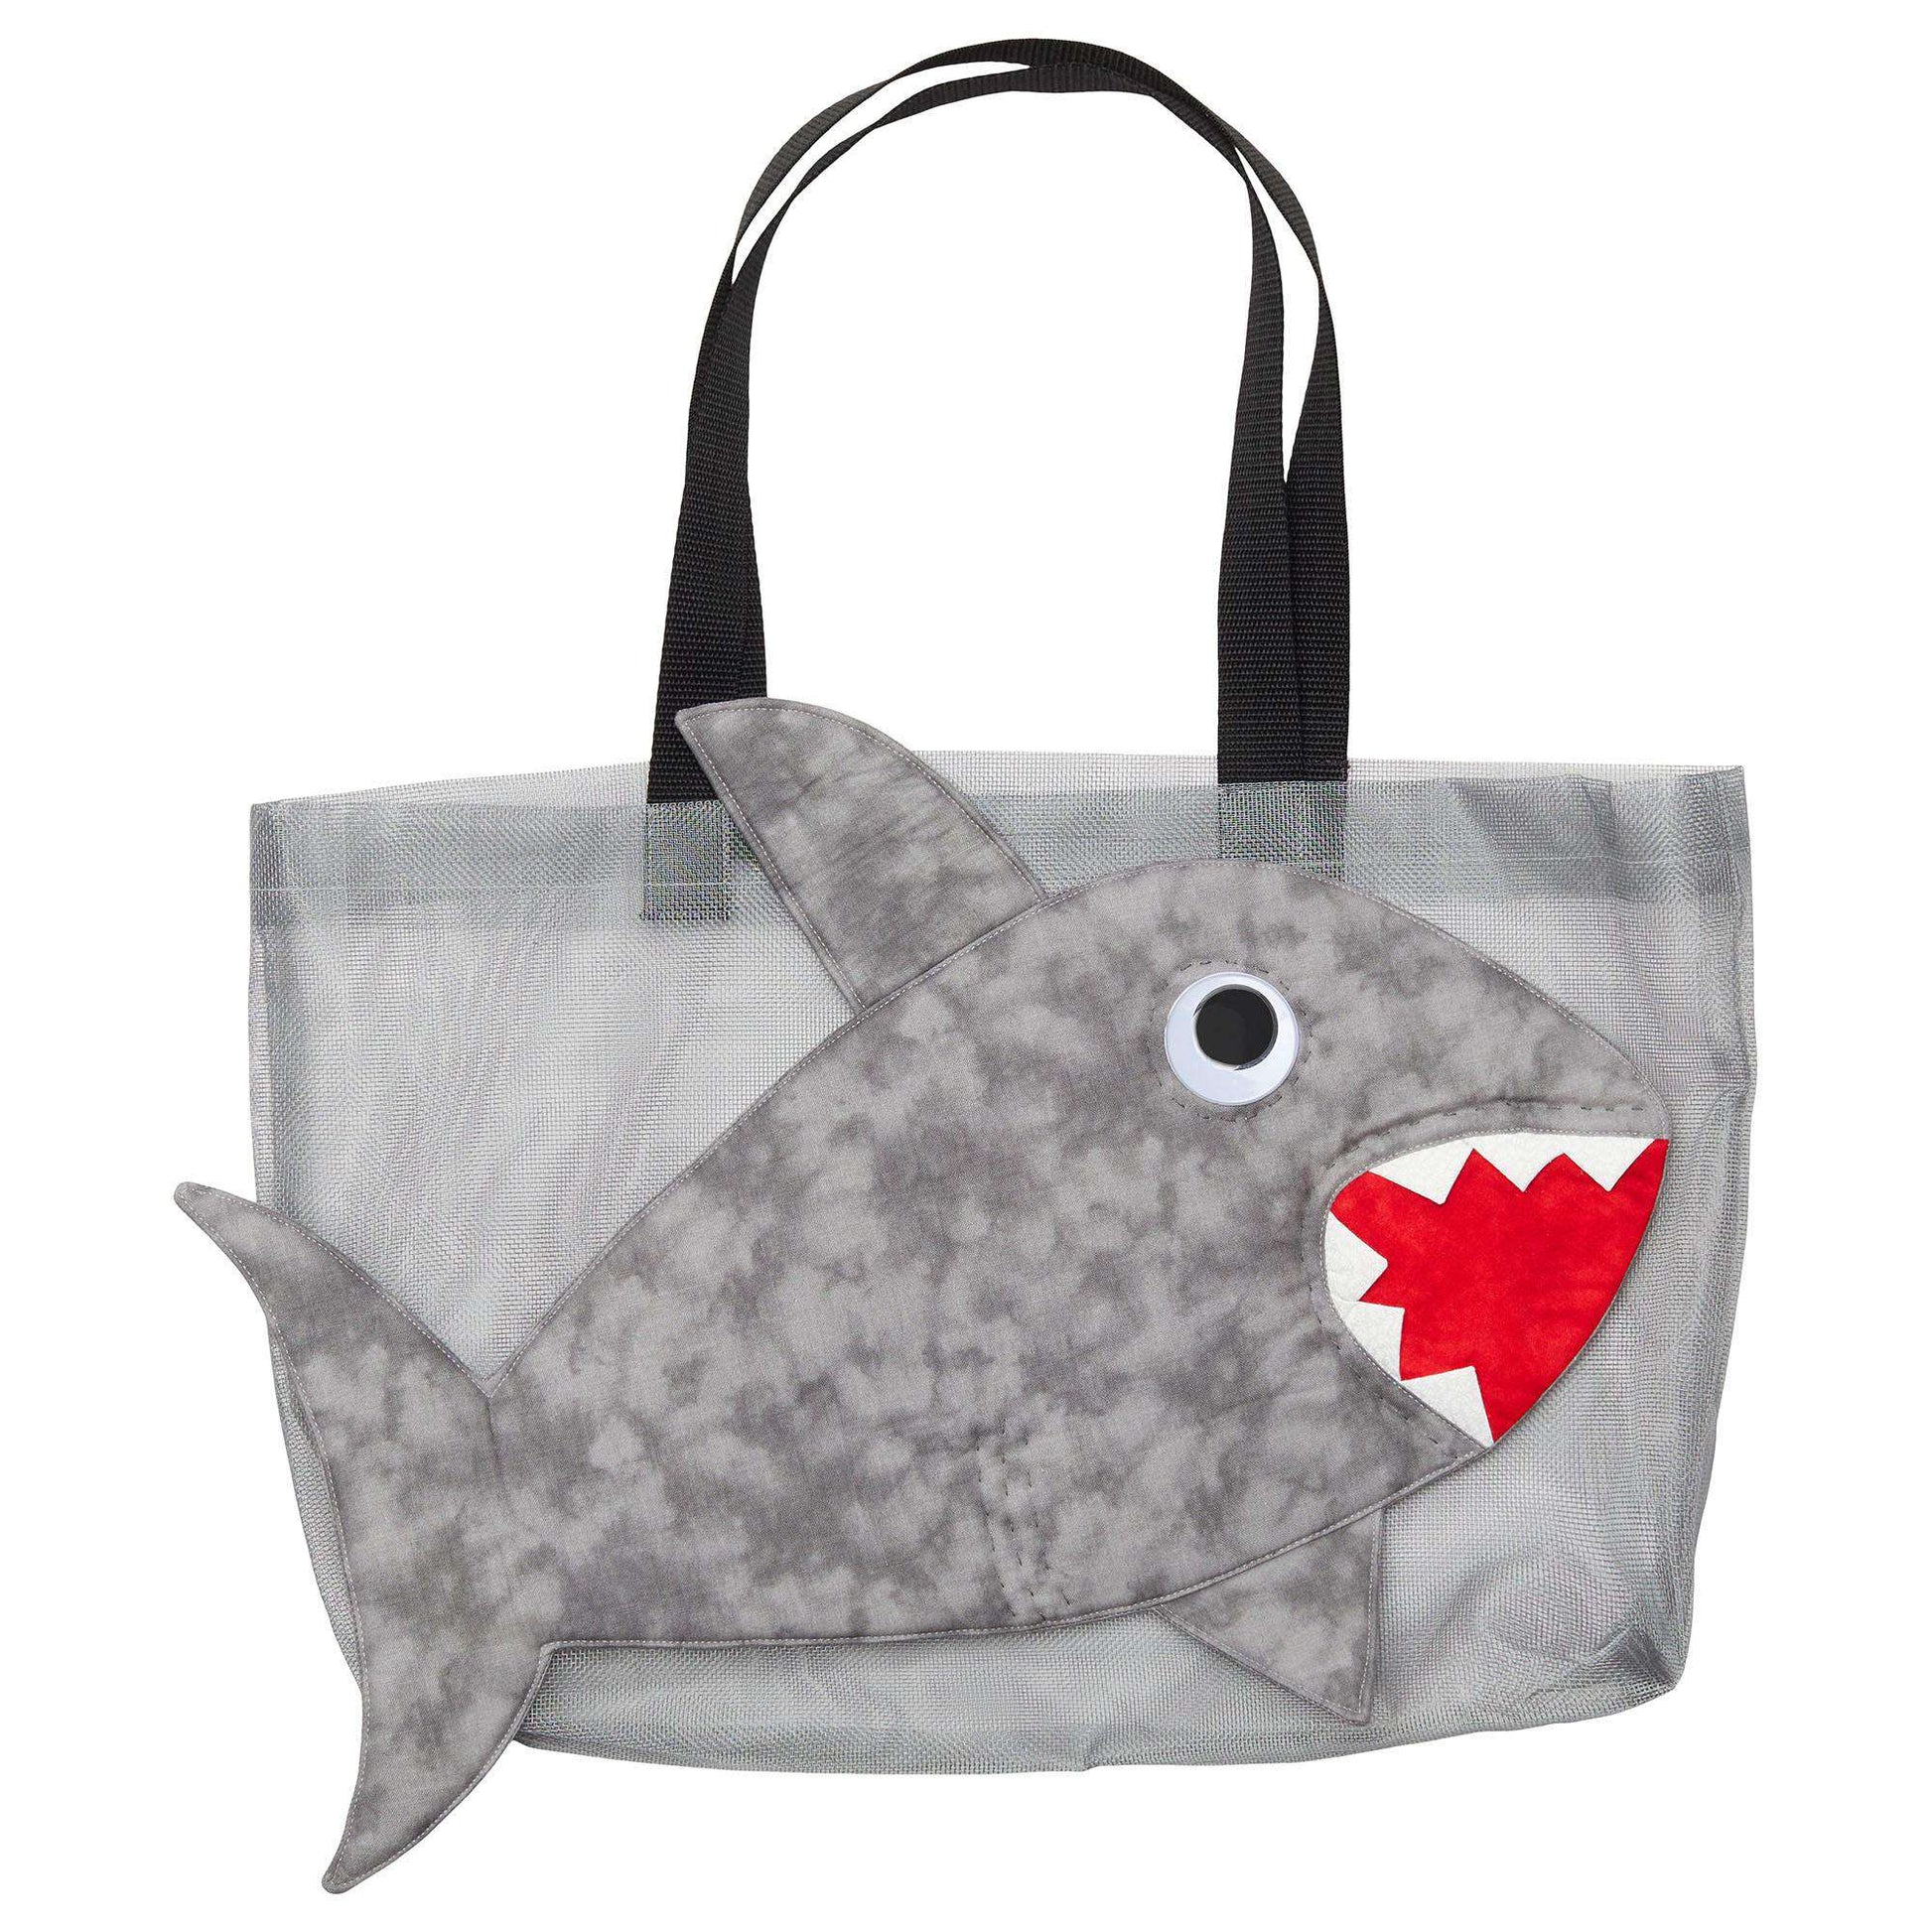 Free Coats Sewing & Clark Shark Tote Bag Pattern